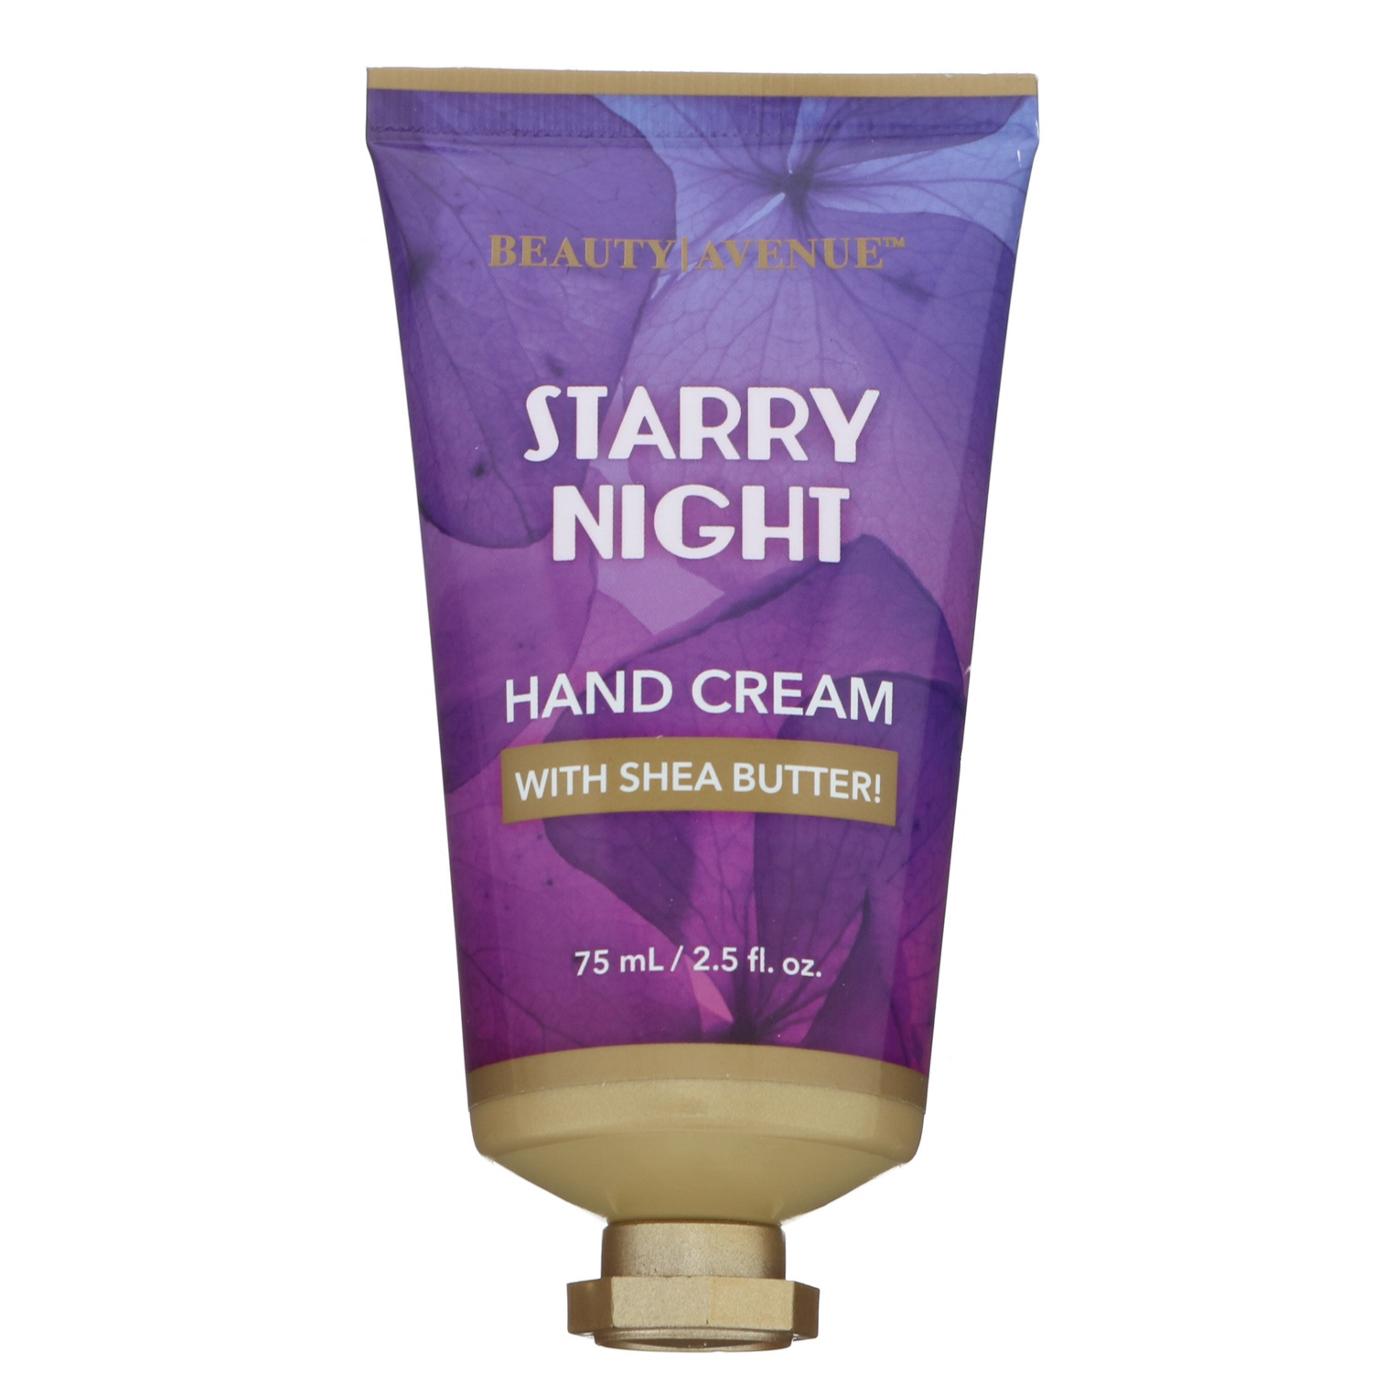 Beauty Avenue Hand Cream Starry Night Hand Cream; image 2 of 2